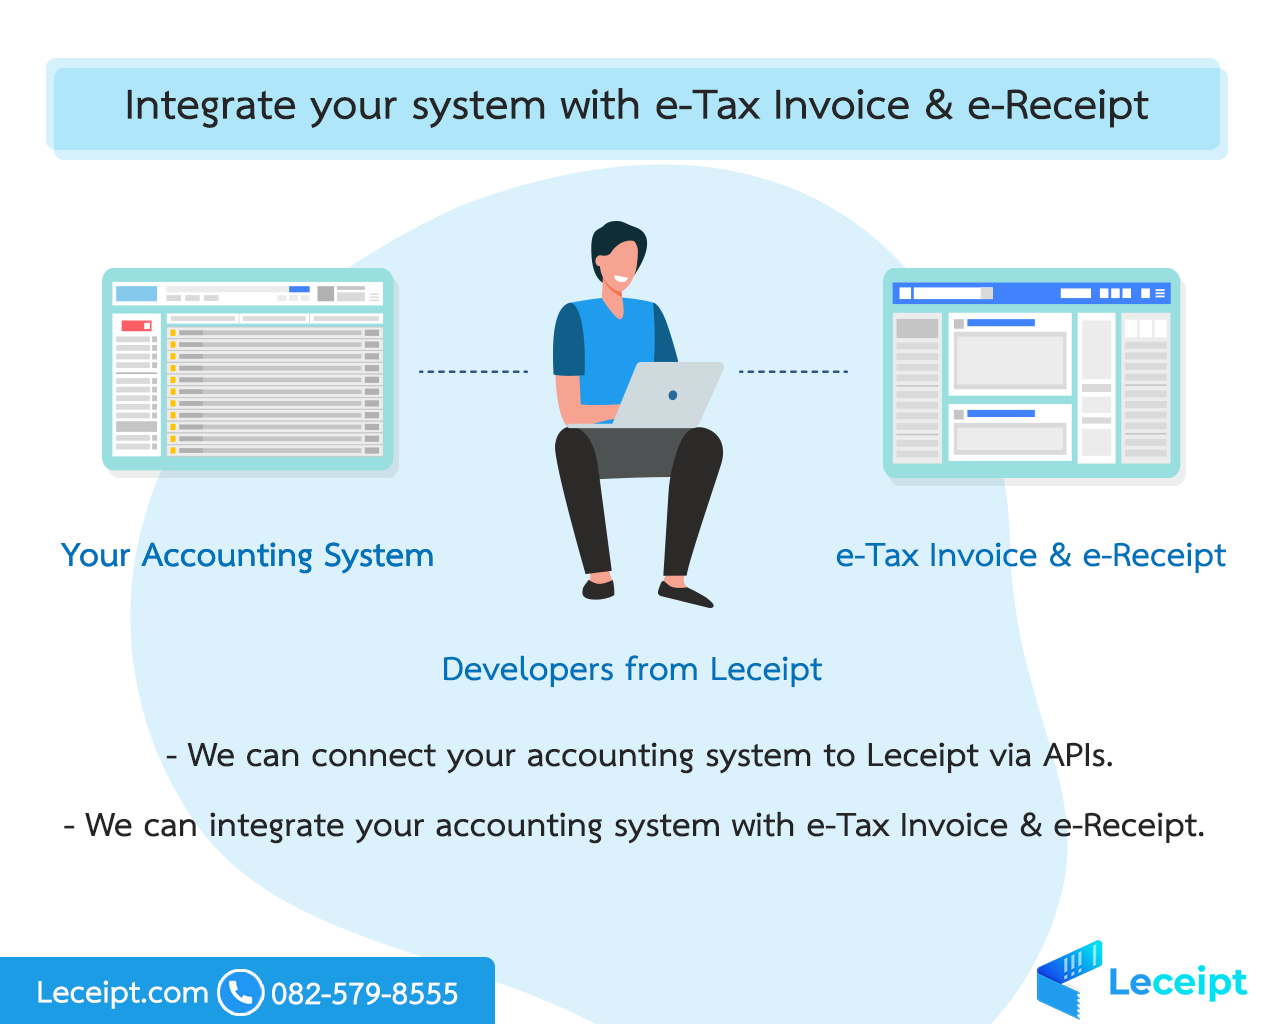 connection-with-e-Tax Invoice & e-Receipt-eng